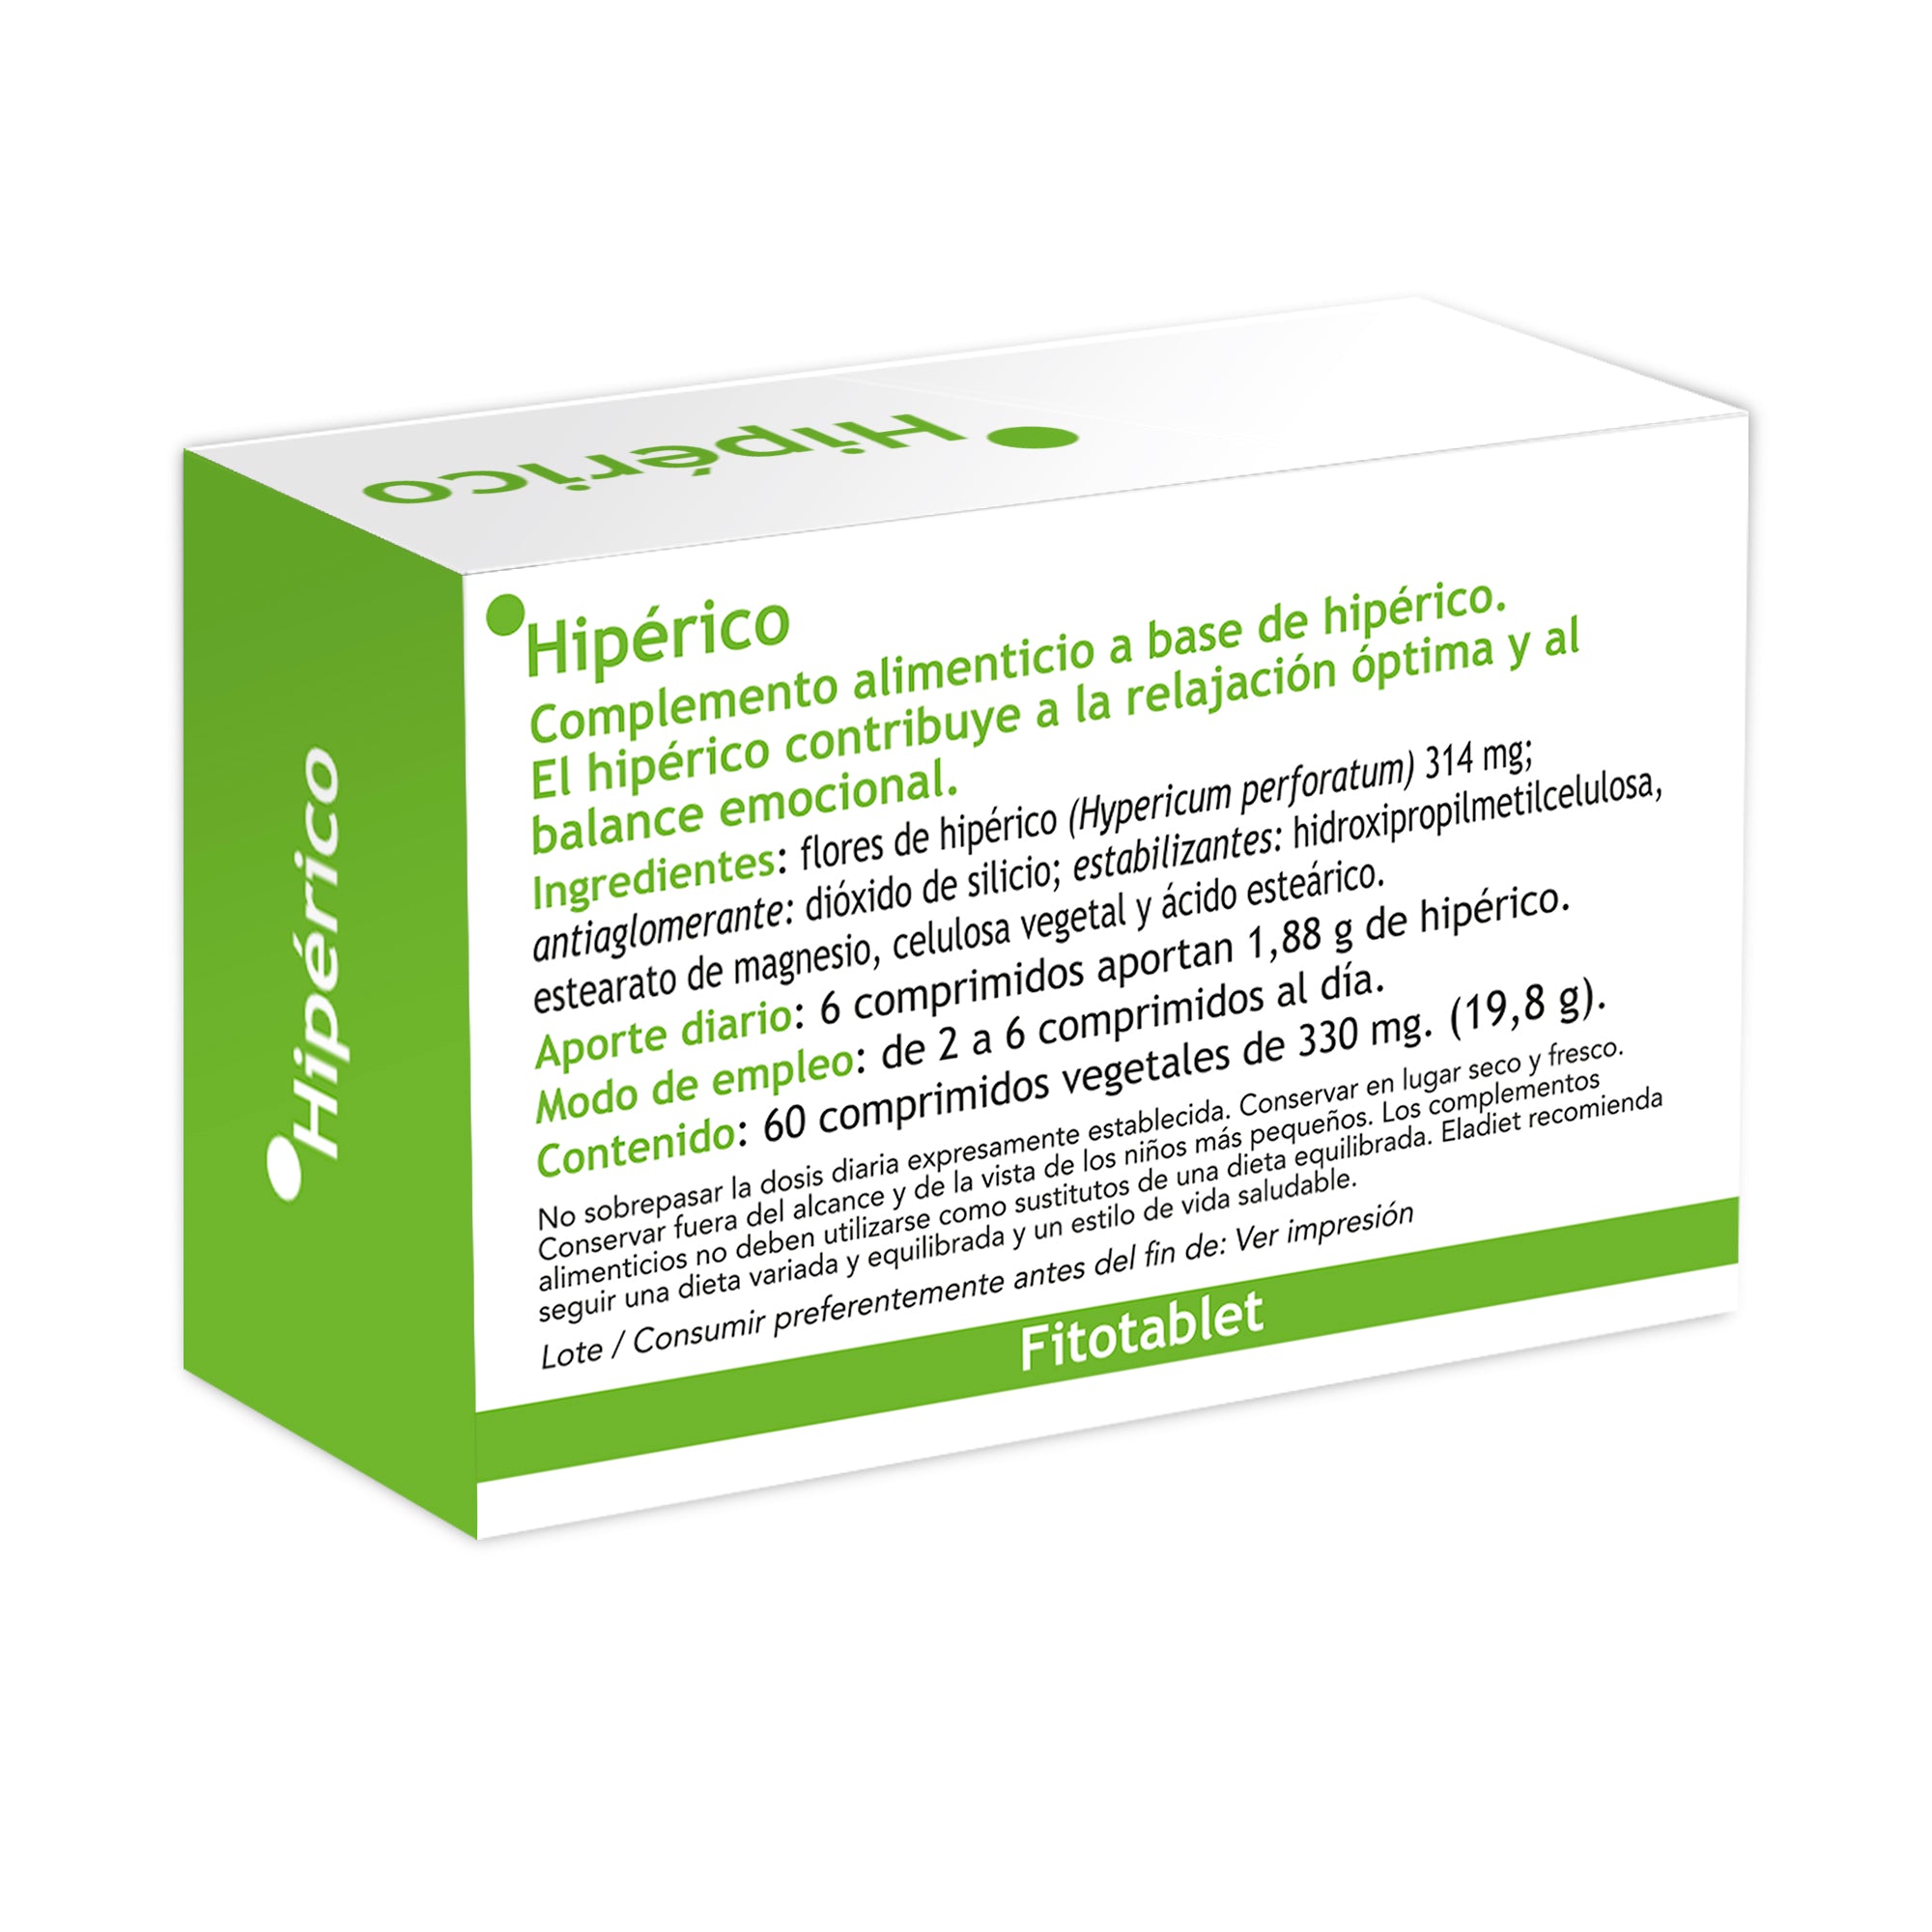 Eladiet - Fitotablet Hipericon 330Mg 60 Comprimidos - Biopharmacia, Parafarmacia online